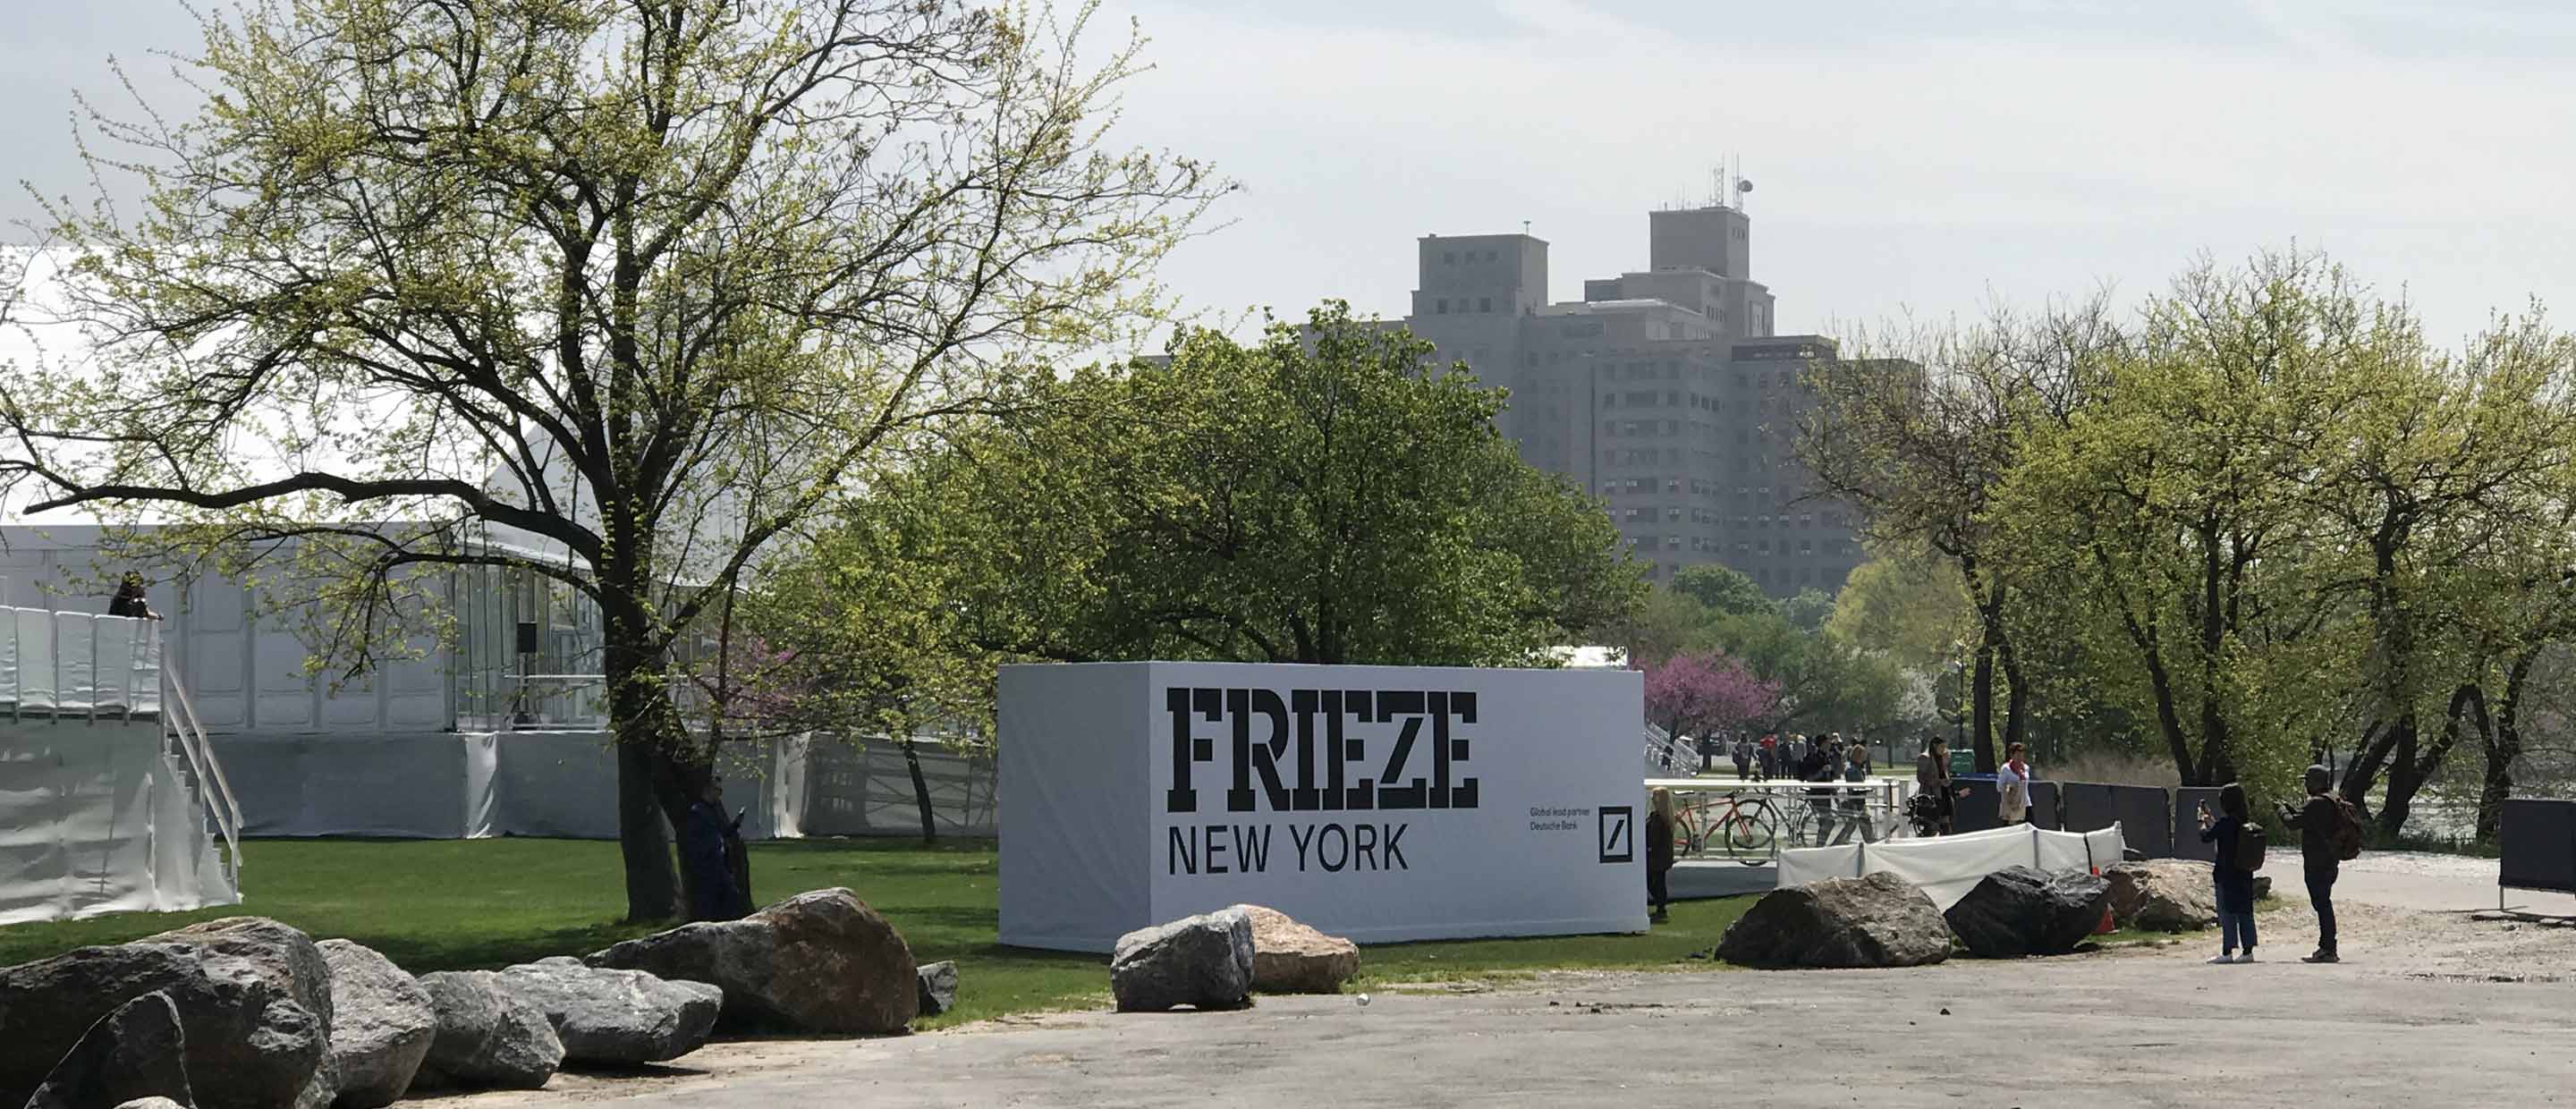 Frieze-New-York-2019-Deutsche-Bank-banner.jpg